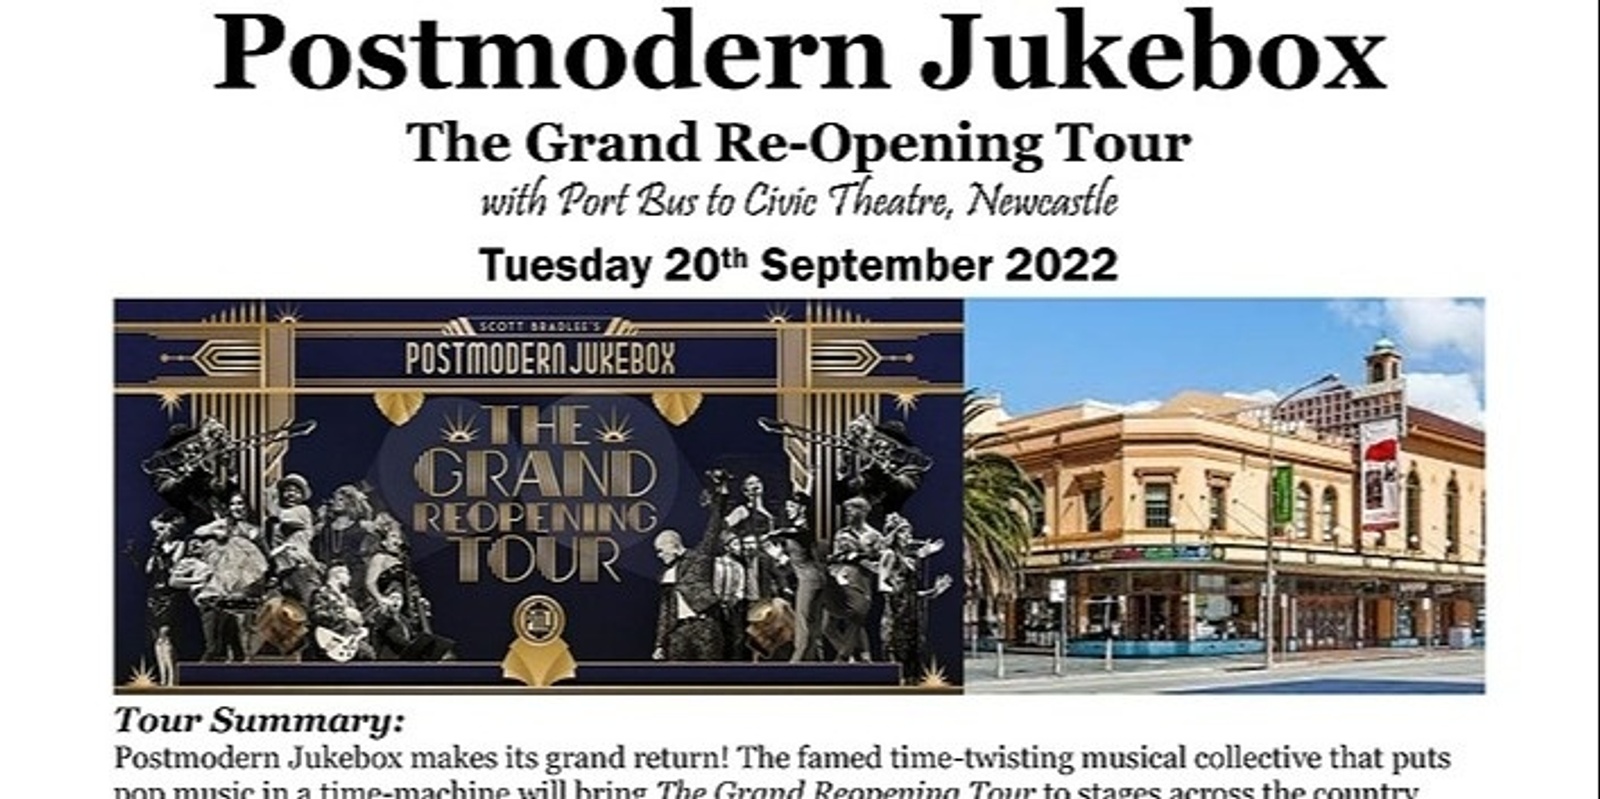 Postmodern Jukebox The Grand Re-Opening Tour